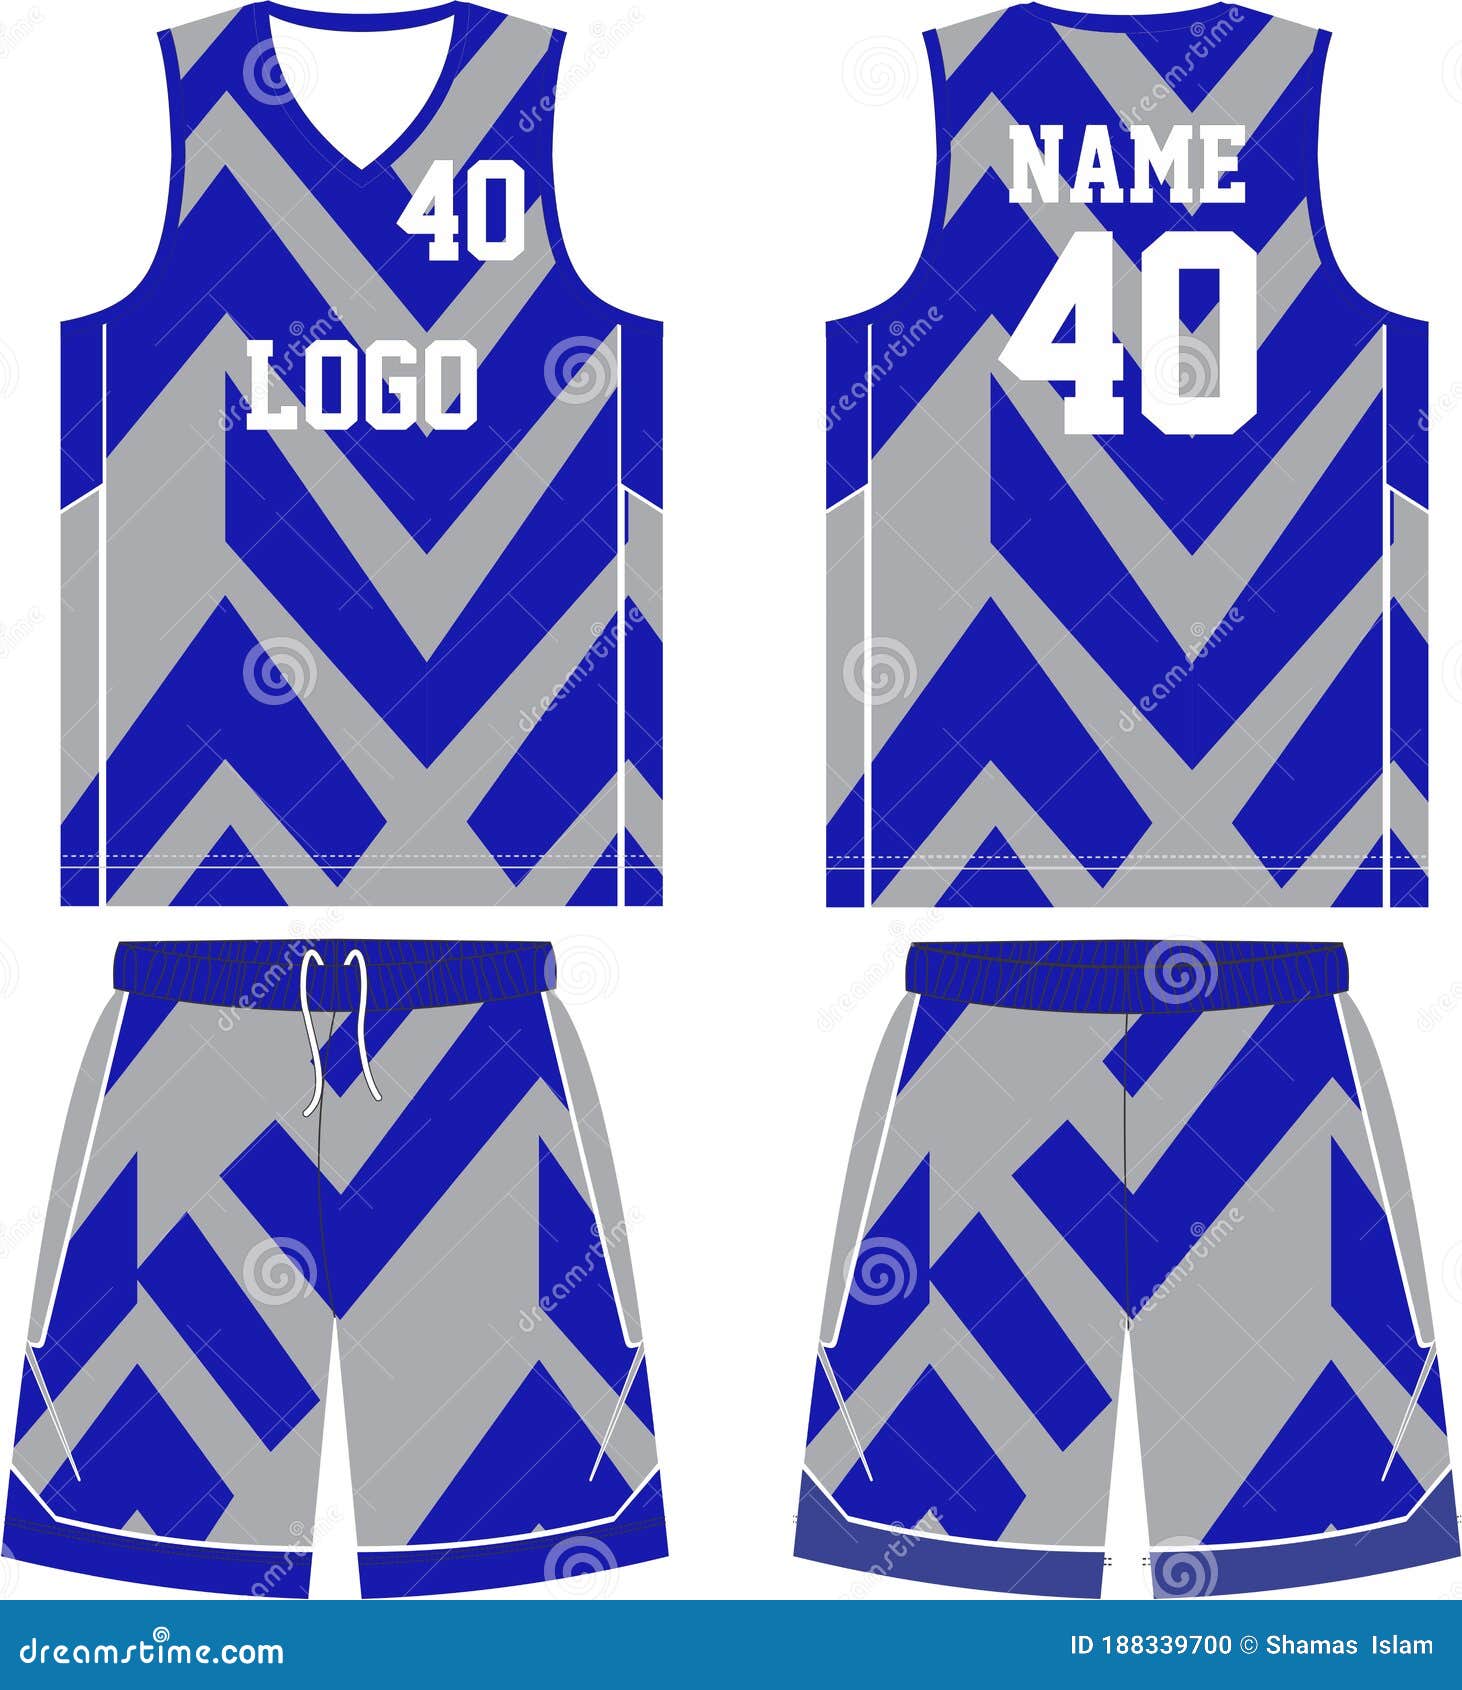 Basketball Uniform Custom Design Mockups Templates Design for Basketball  Club T-shirt Mockup for Basketball Jersey. Front View Stock Vector -  Illustration of neck, jersey: 188339581